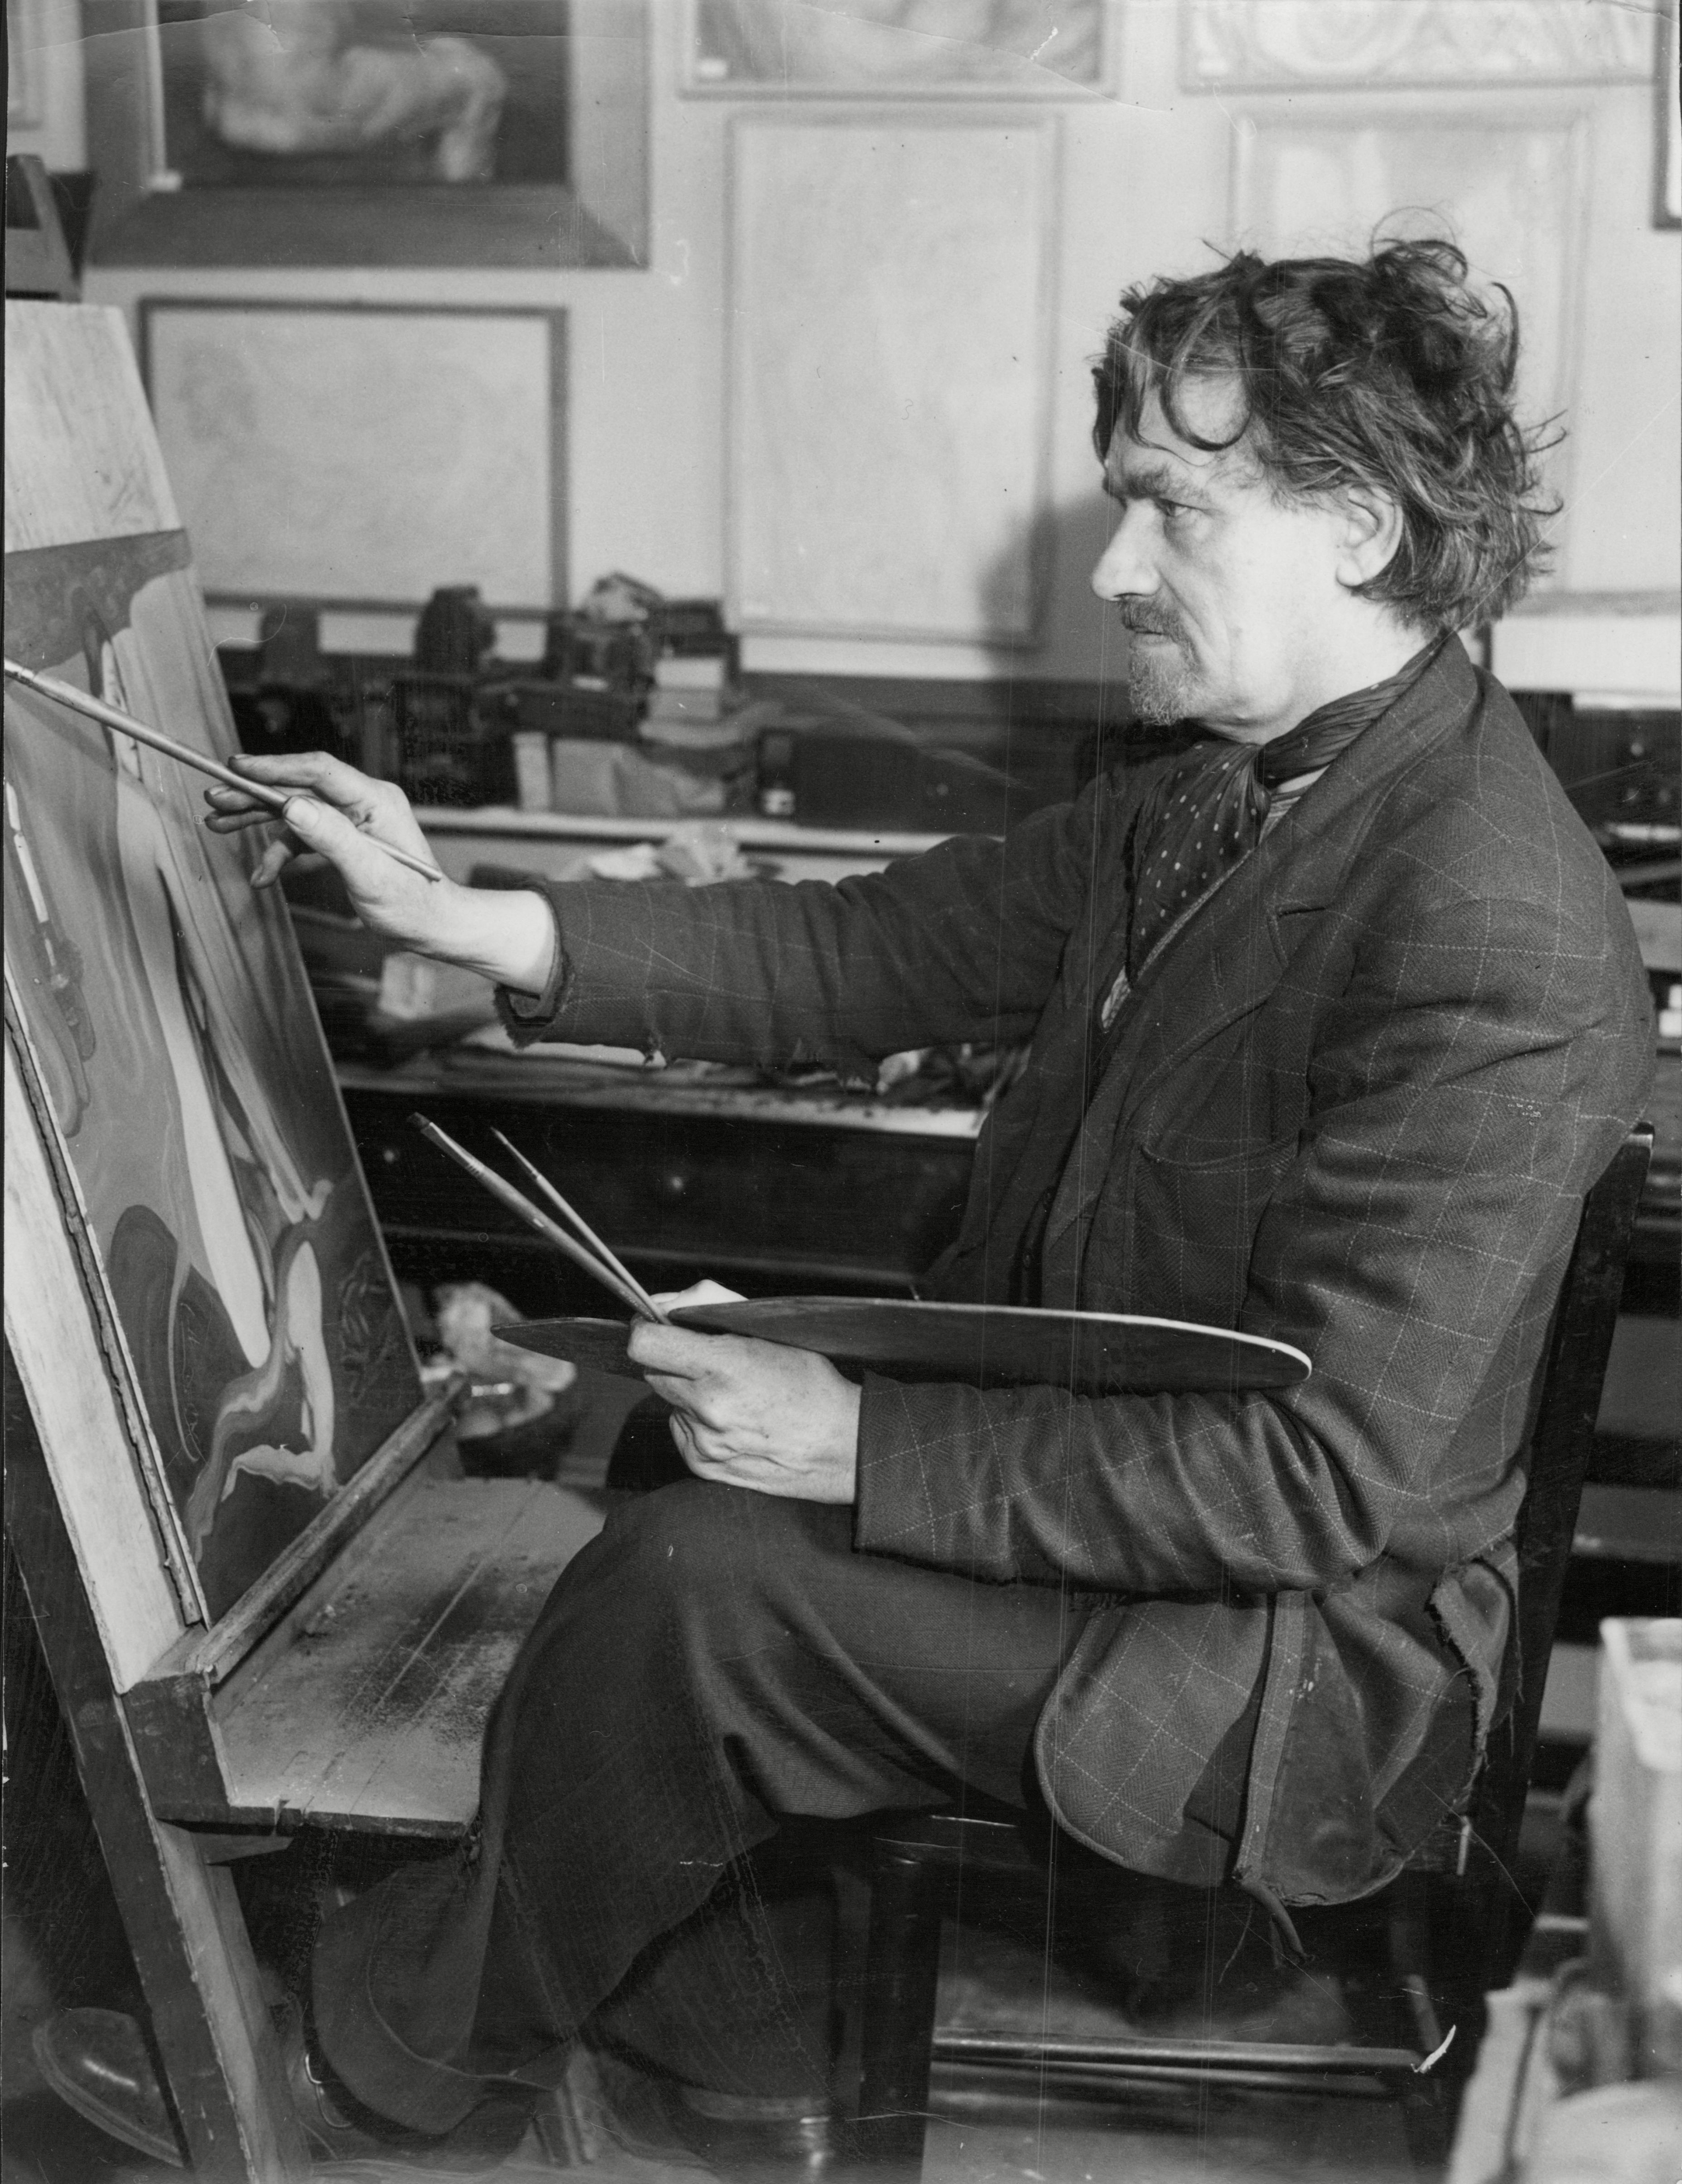 Austin Osman Spare Artist. 17 Apr 1938